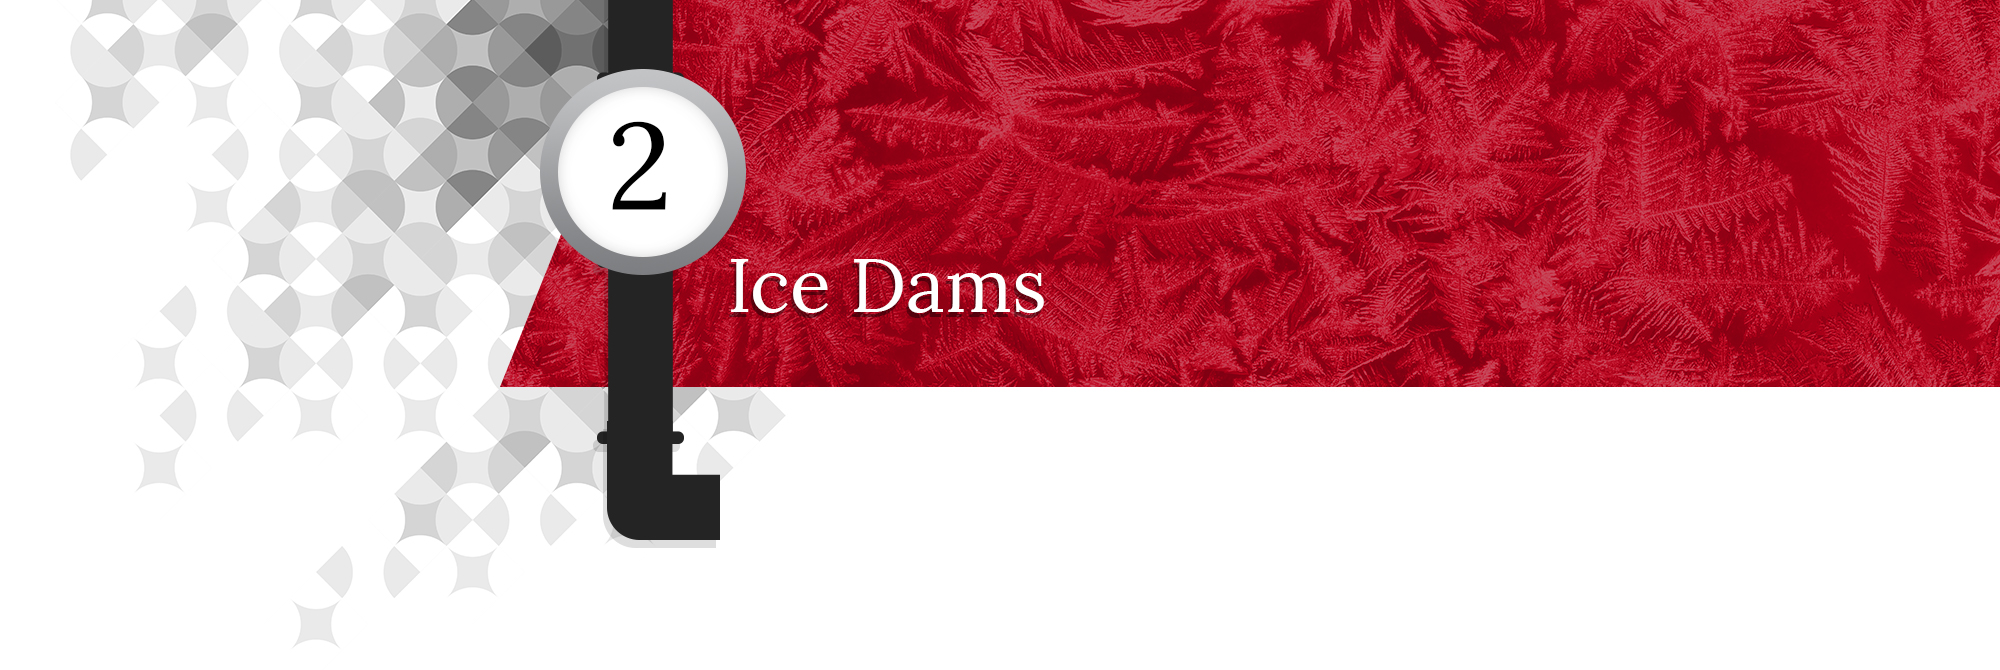 Ice-Dams-5fbb4a74cfaa9